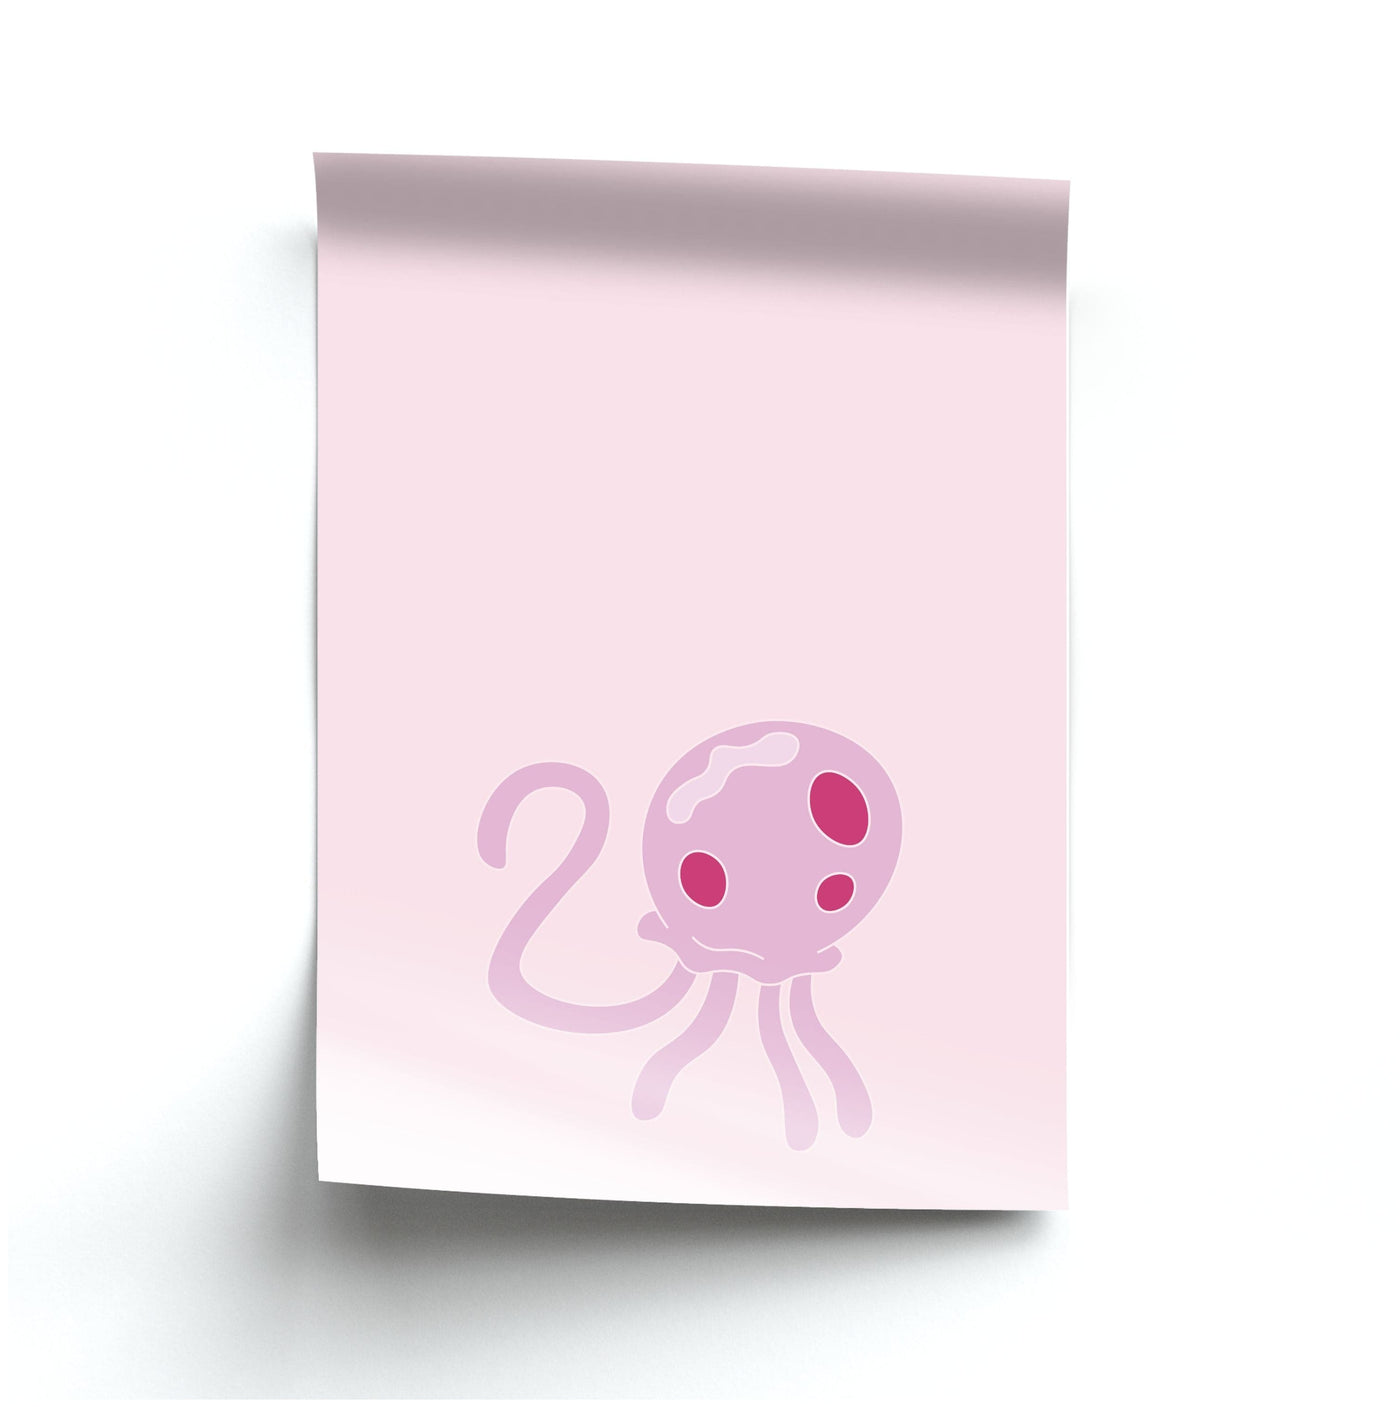 Jellyfish - Spongebob Poster